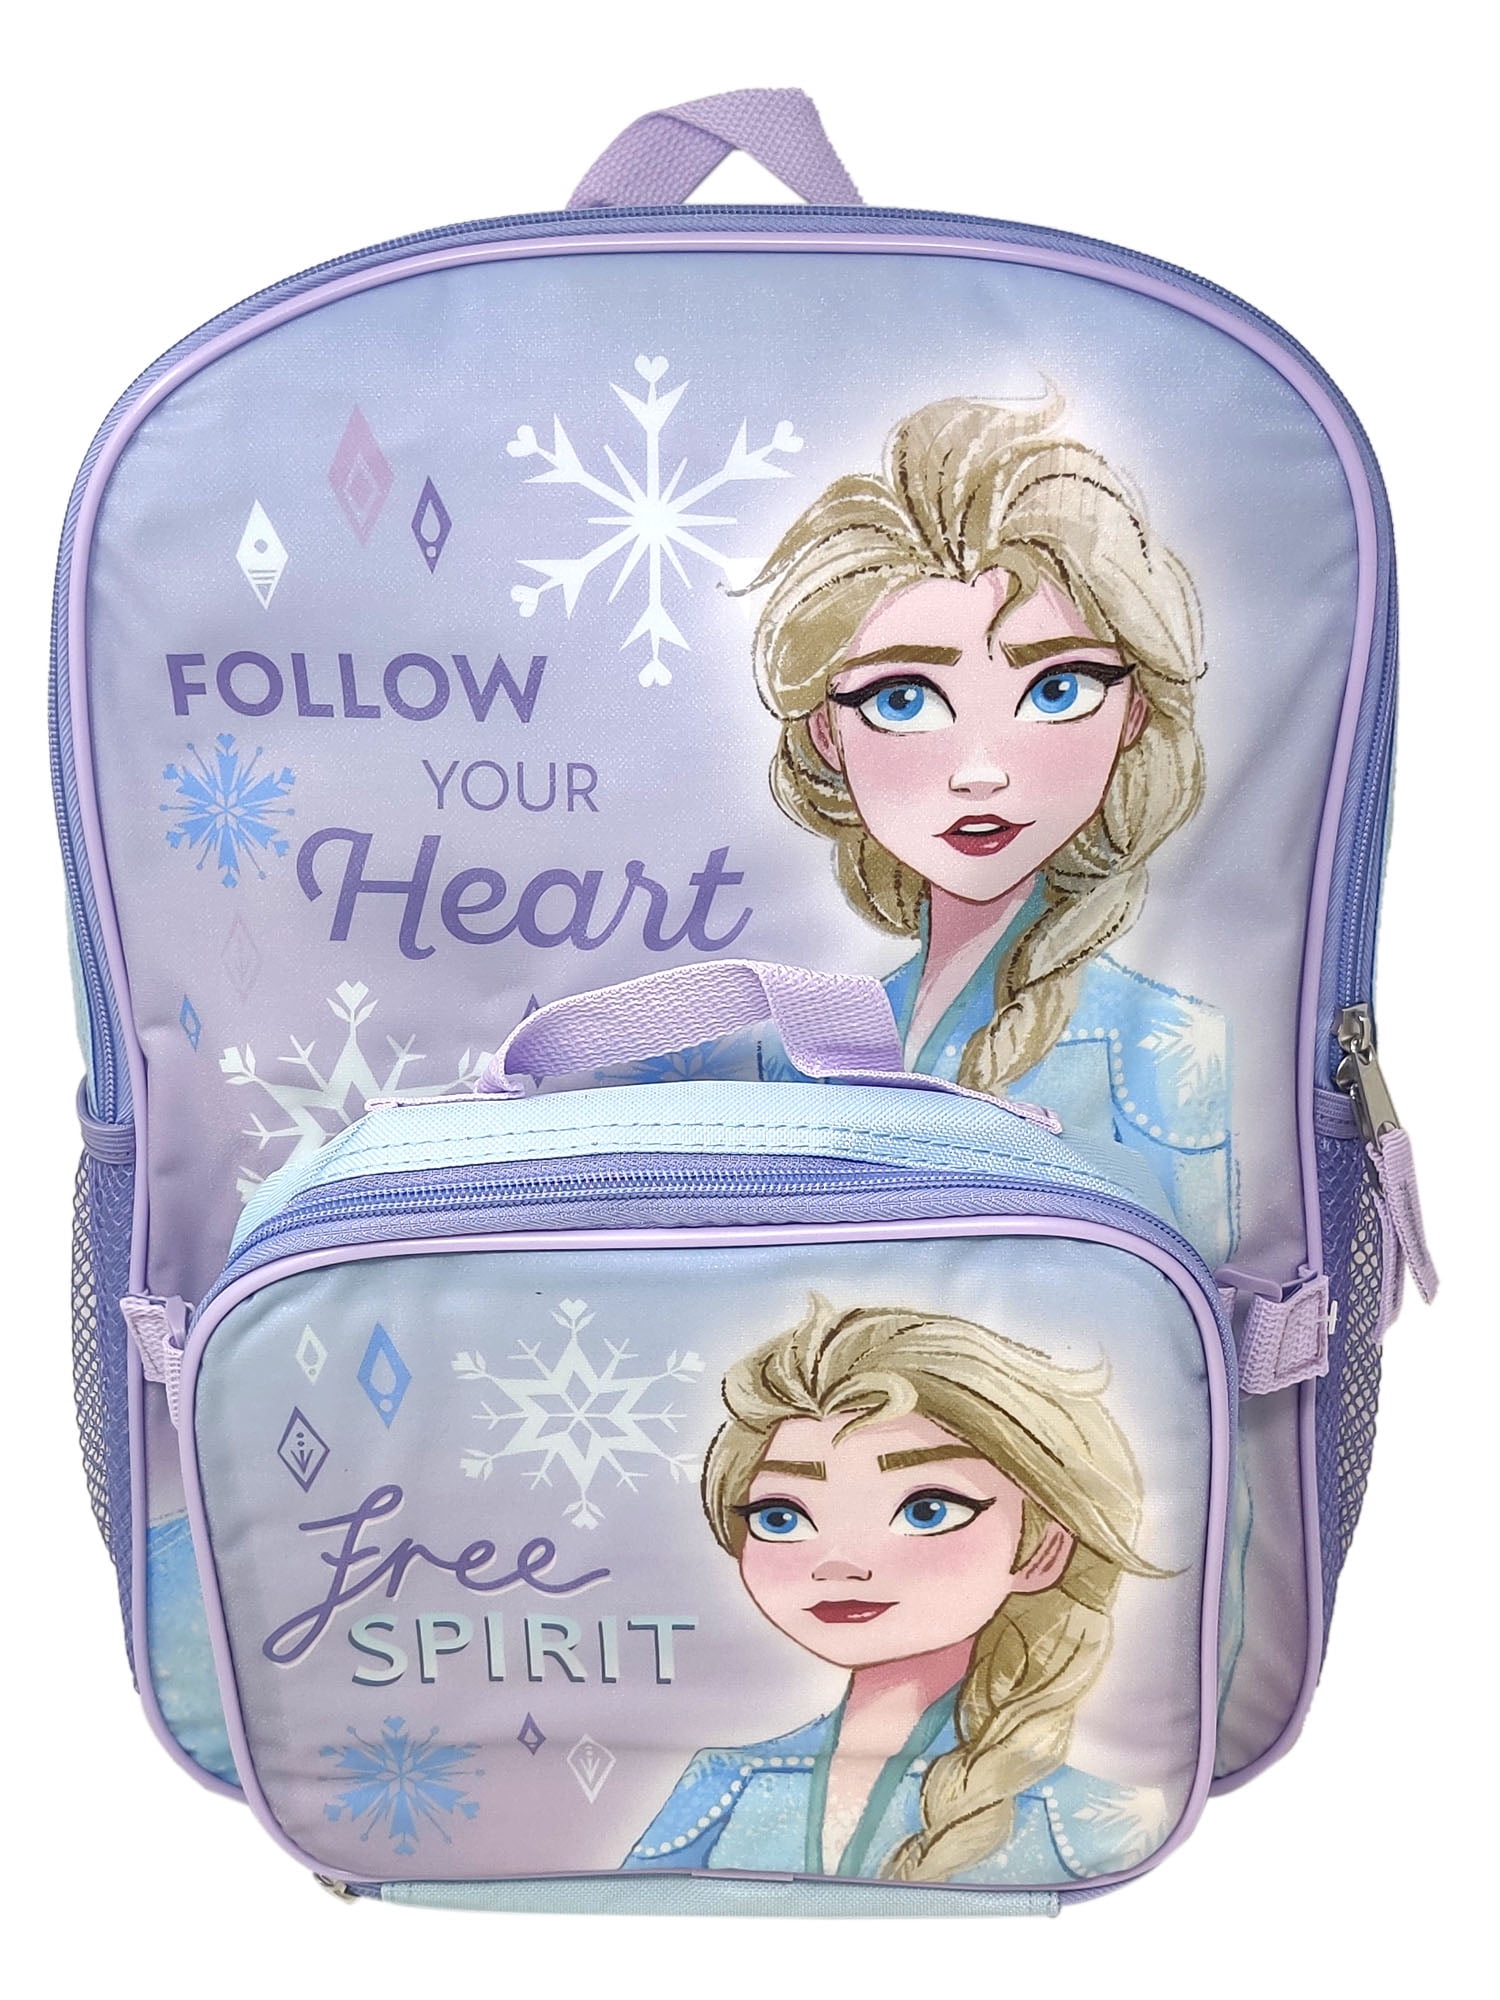 Disney Frozen Fever Backpack School Bag Gym Travel Holiday Girls Anna Elsa 